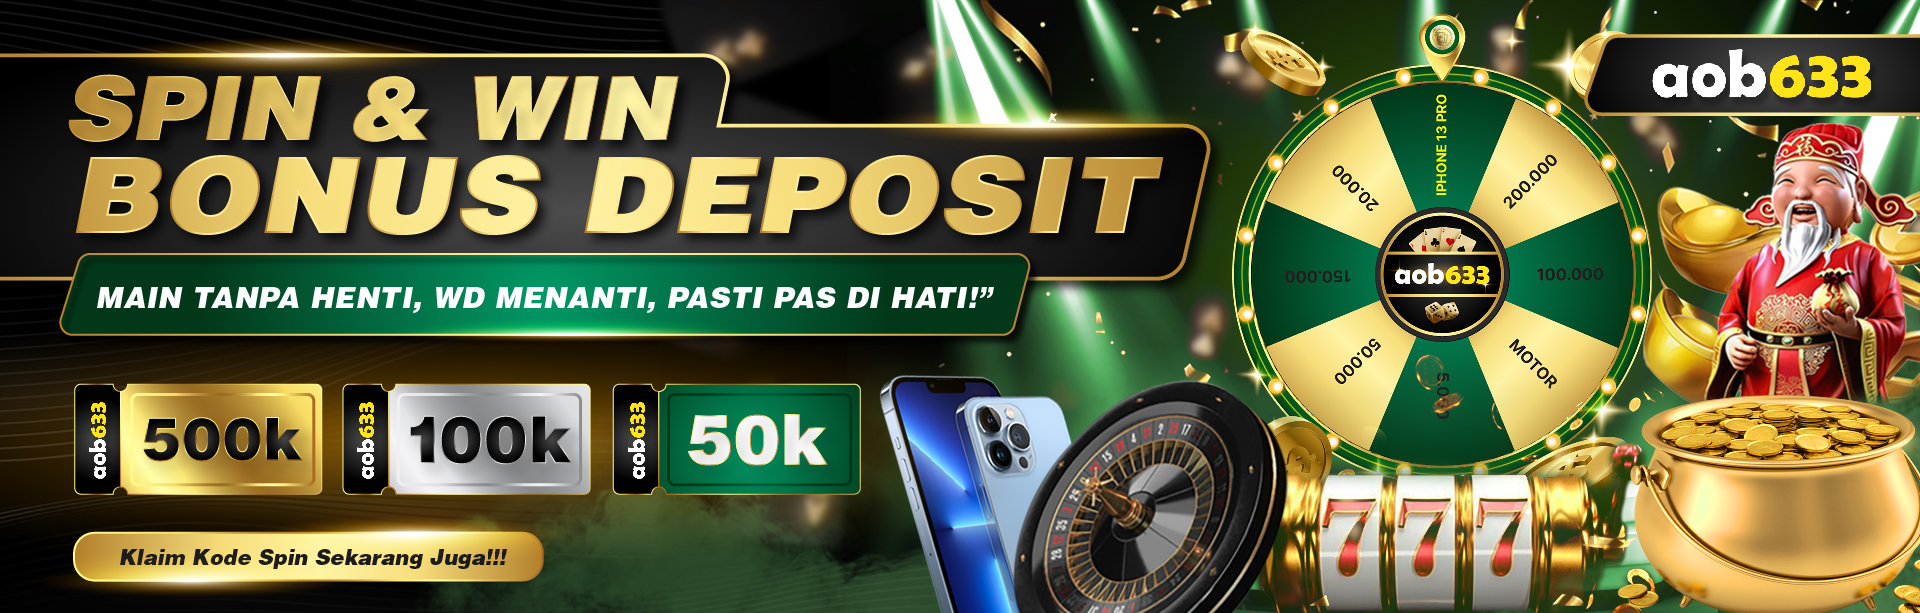 Spin & Win Mega Bonus Deposit AOB633